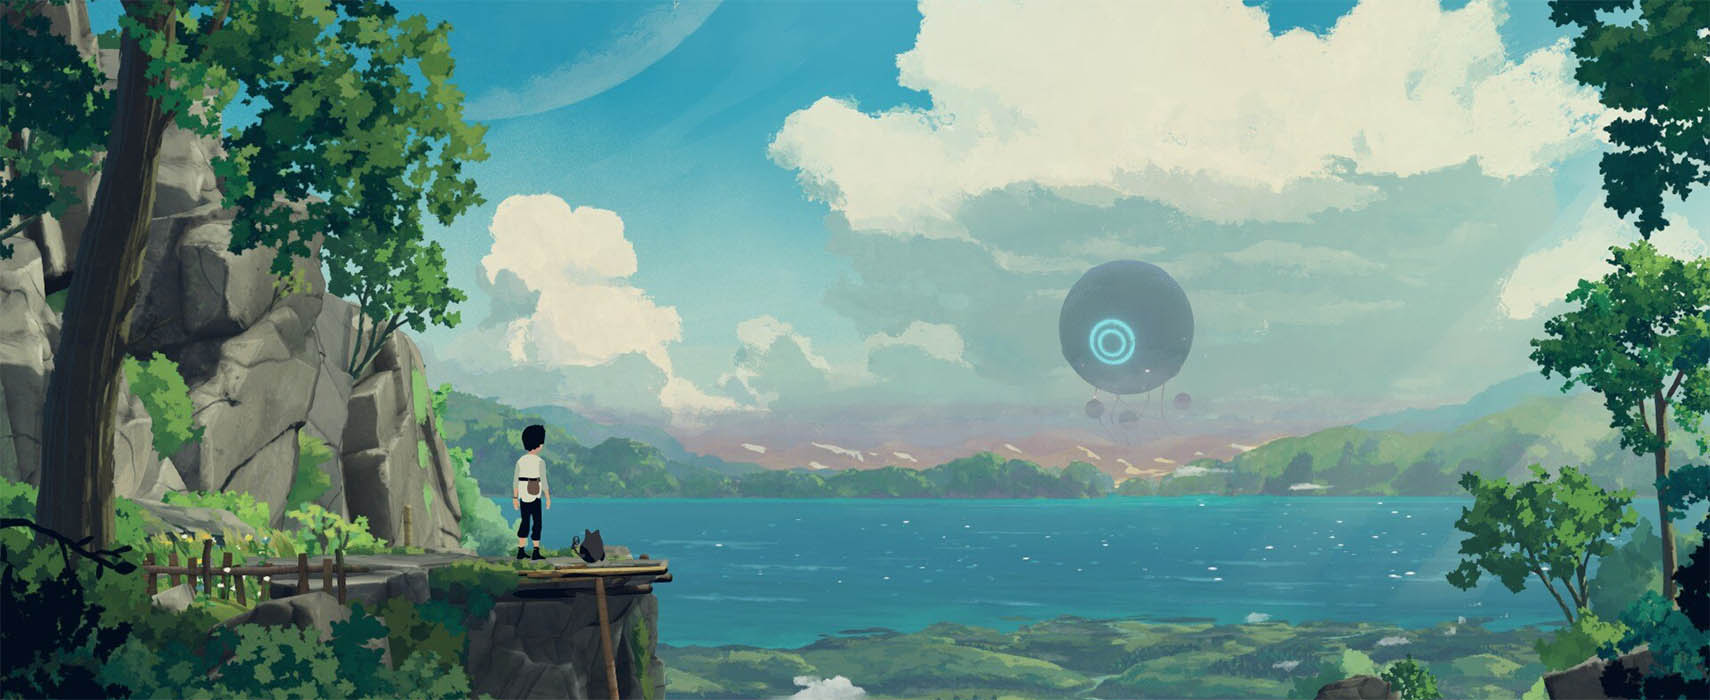 Вышла Planet of Lana – игра про приключения за пределами Земли